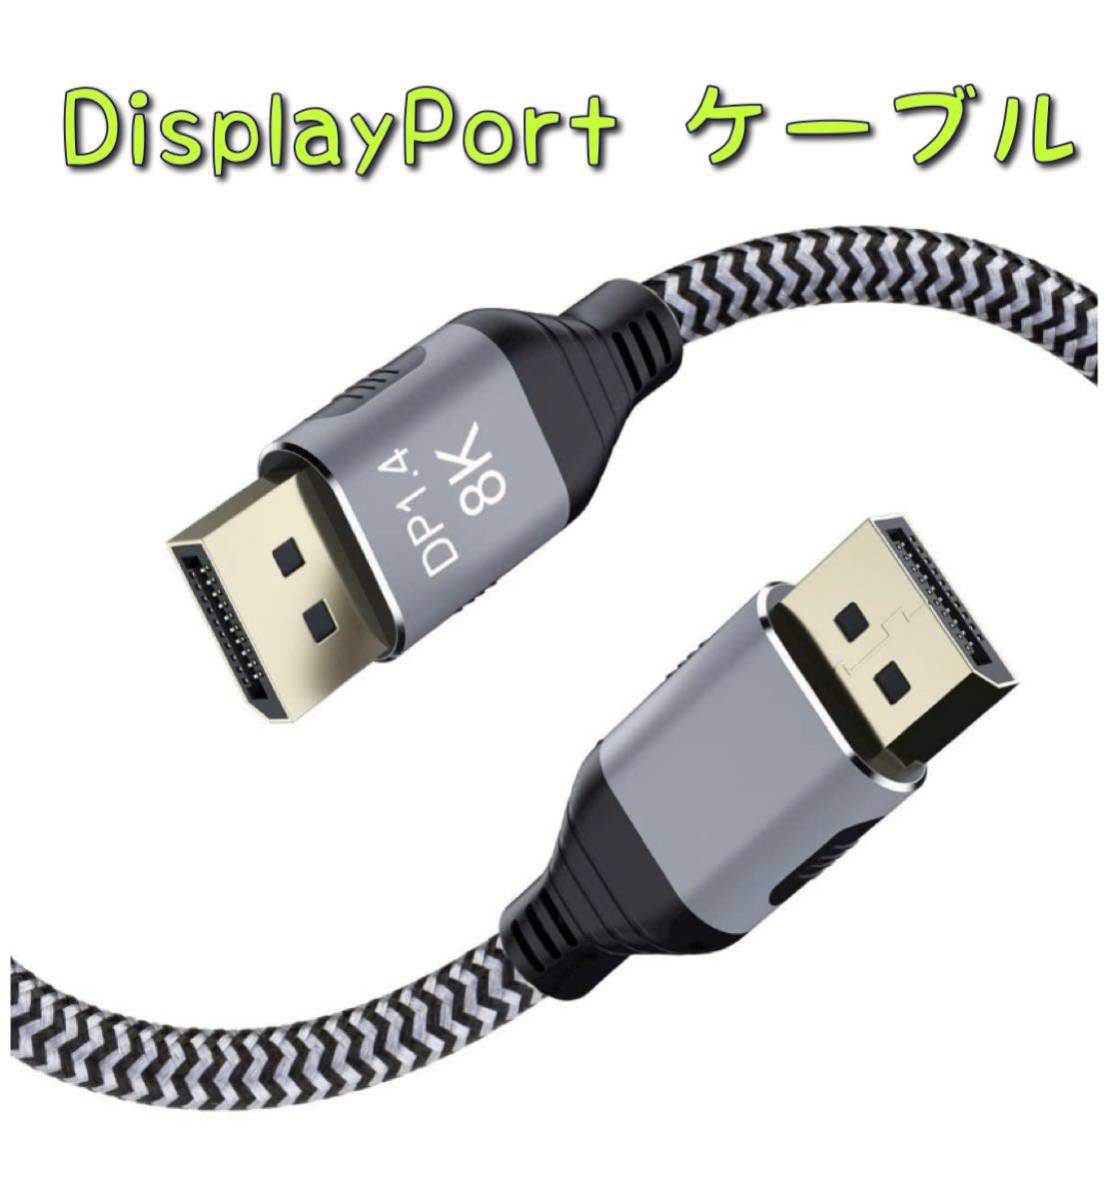 DisplayPort ケーブル 8K 2m